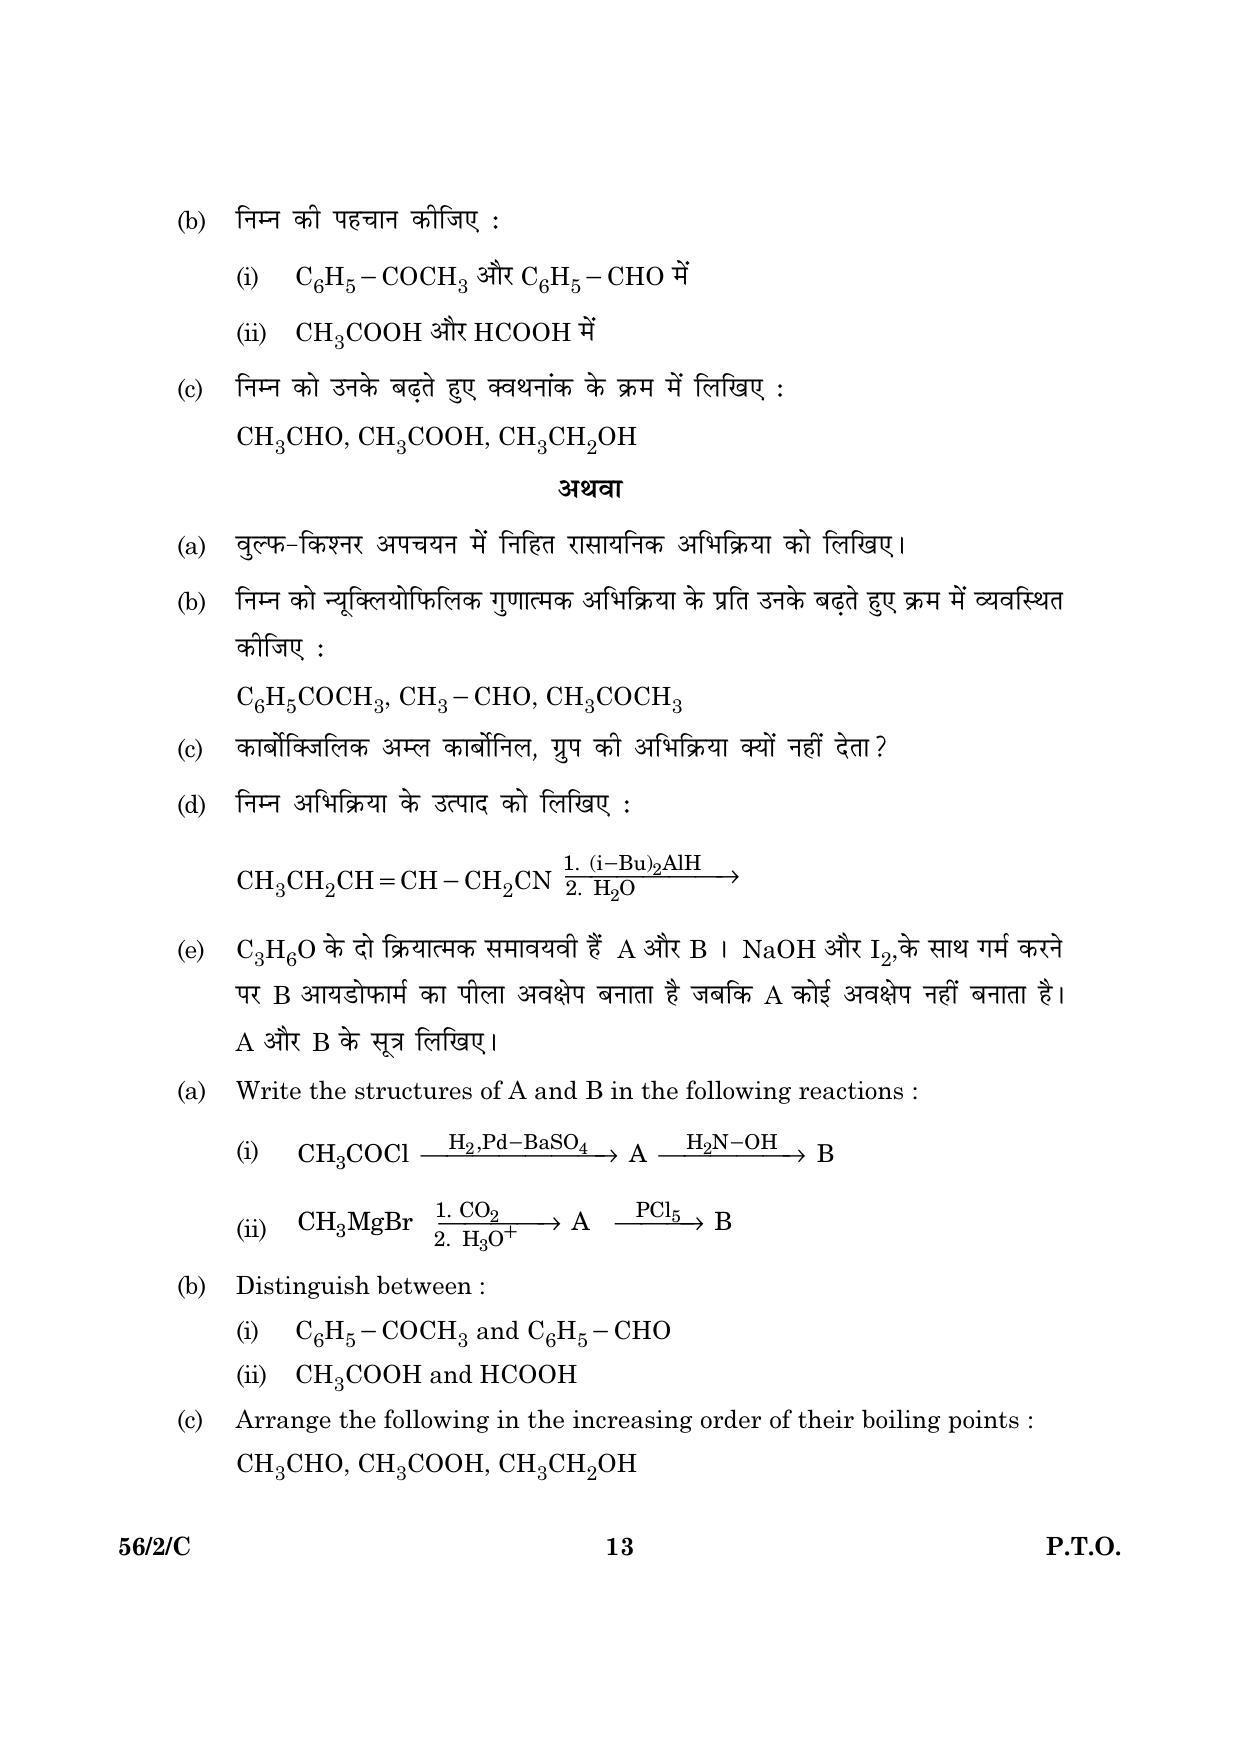 CBSE Class 12 056 Set 2 C Chemistry 2016 Question Paper - Page 13